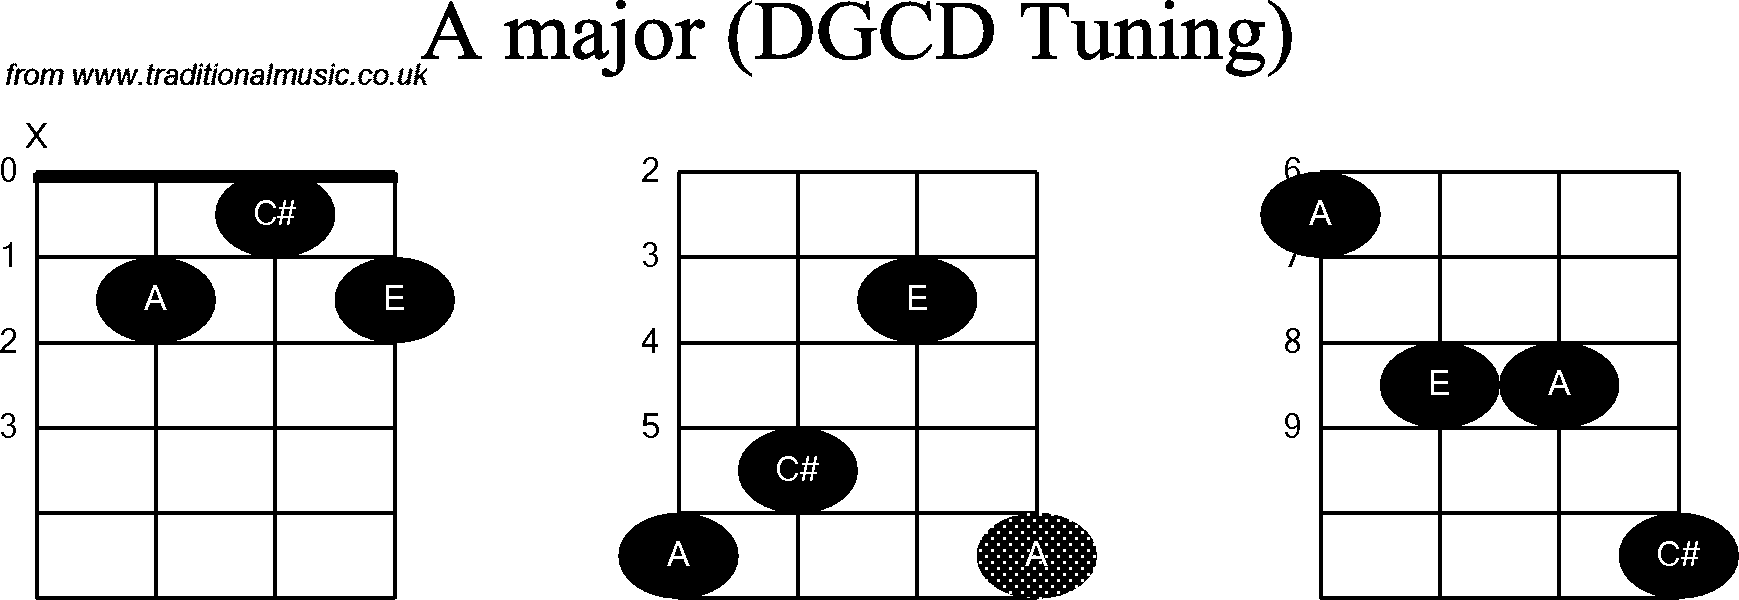 Chord diagrams for Banjo(G Modal) A